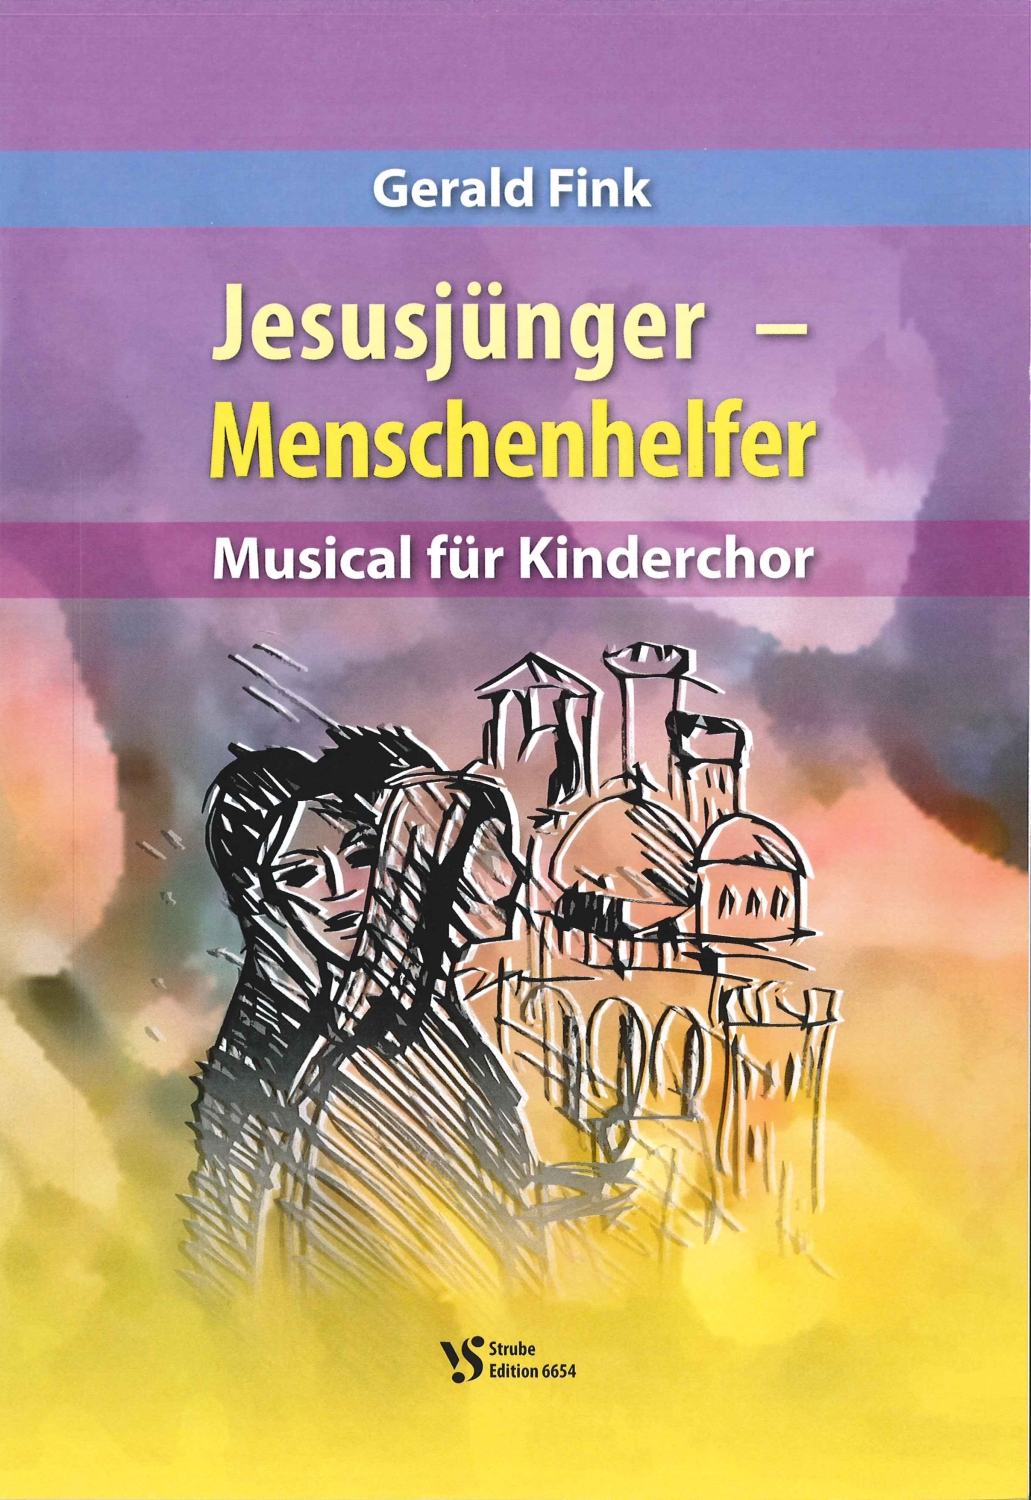 Gerald-Fink-Jesusjuenger-Menschenhelfer-KMusical-__0001.JPG